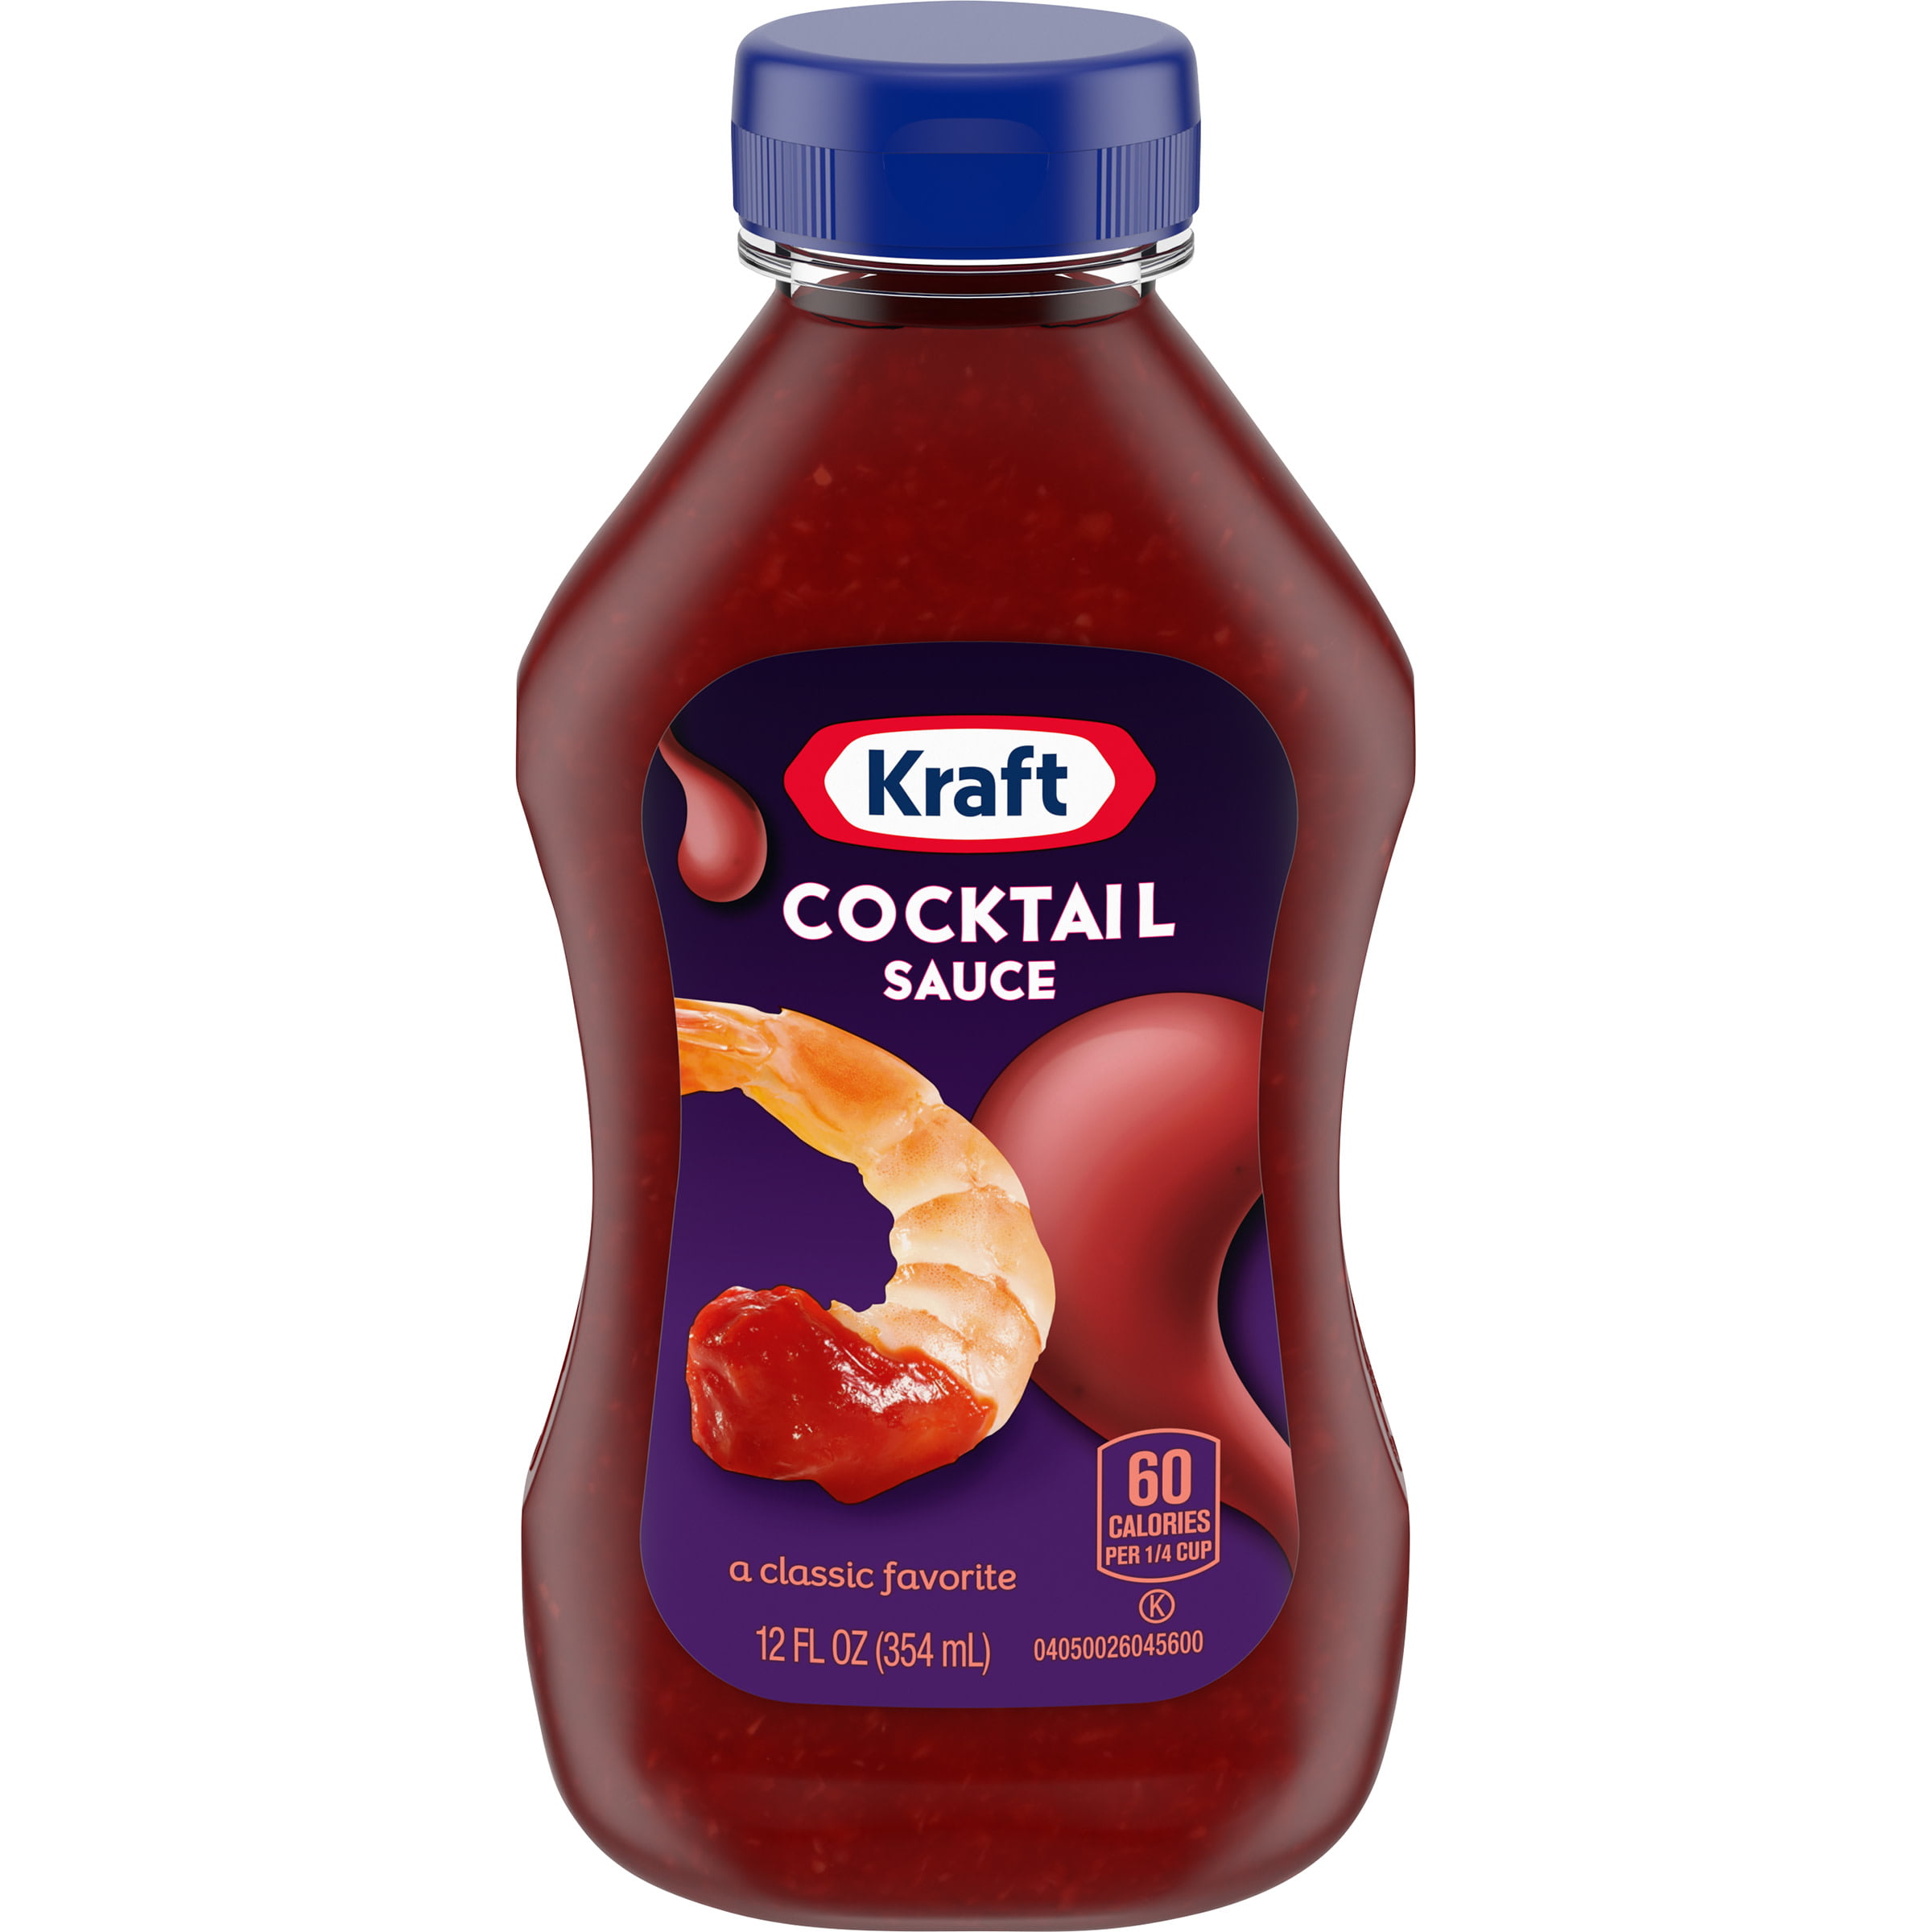 Kraft Cocktail Sauce, 12 fl oz Bottle - Walmart.com - Walmart.com